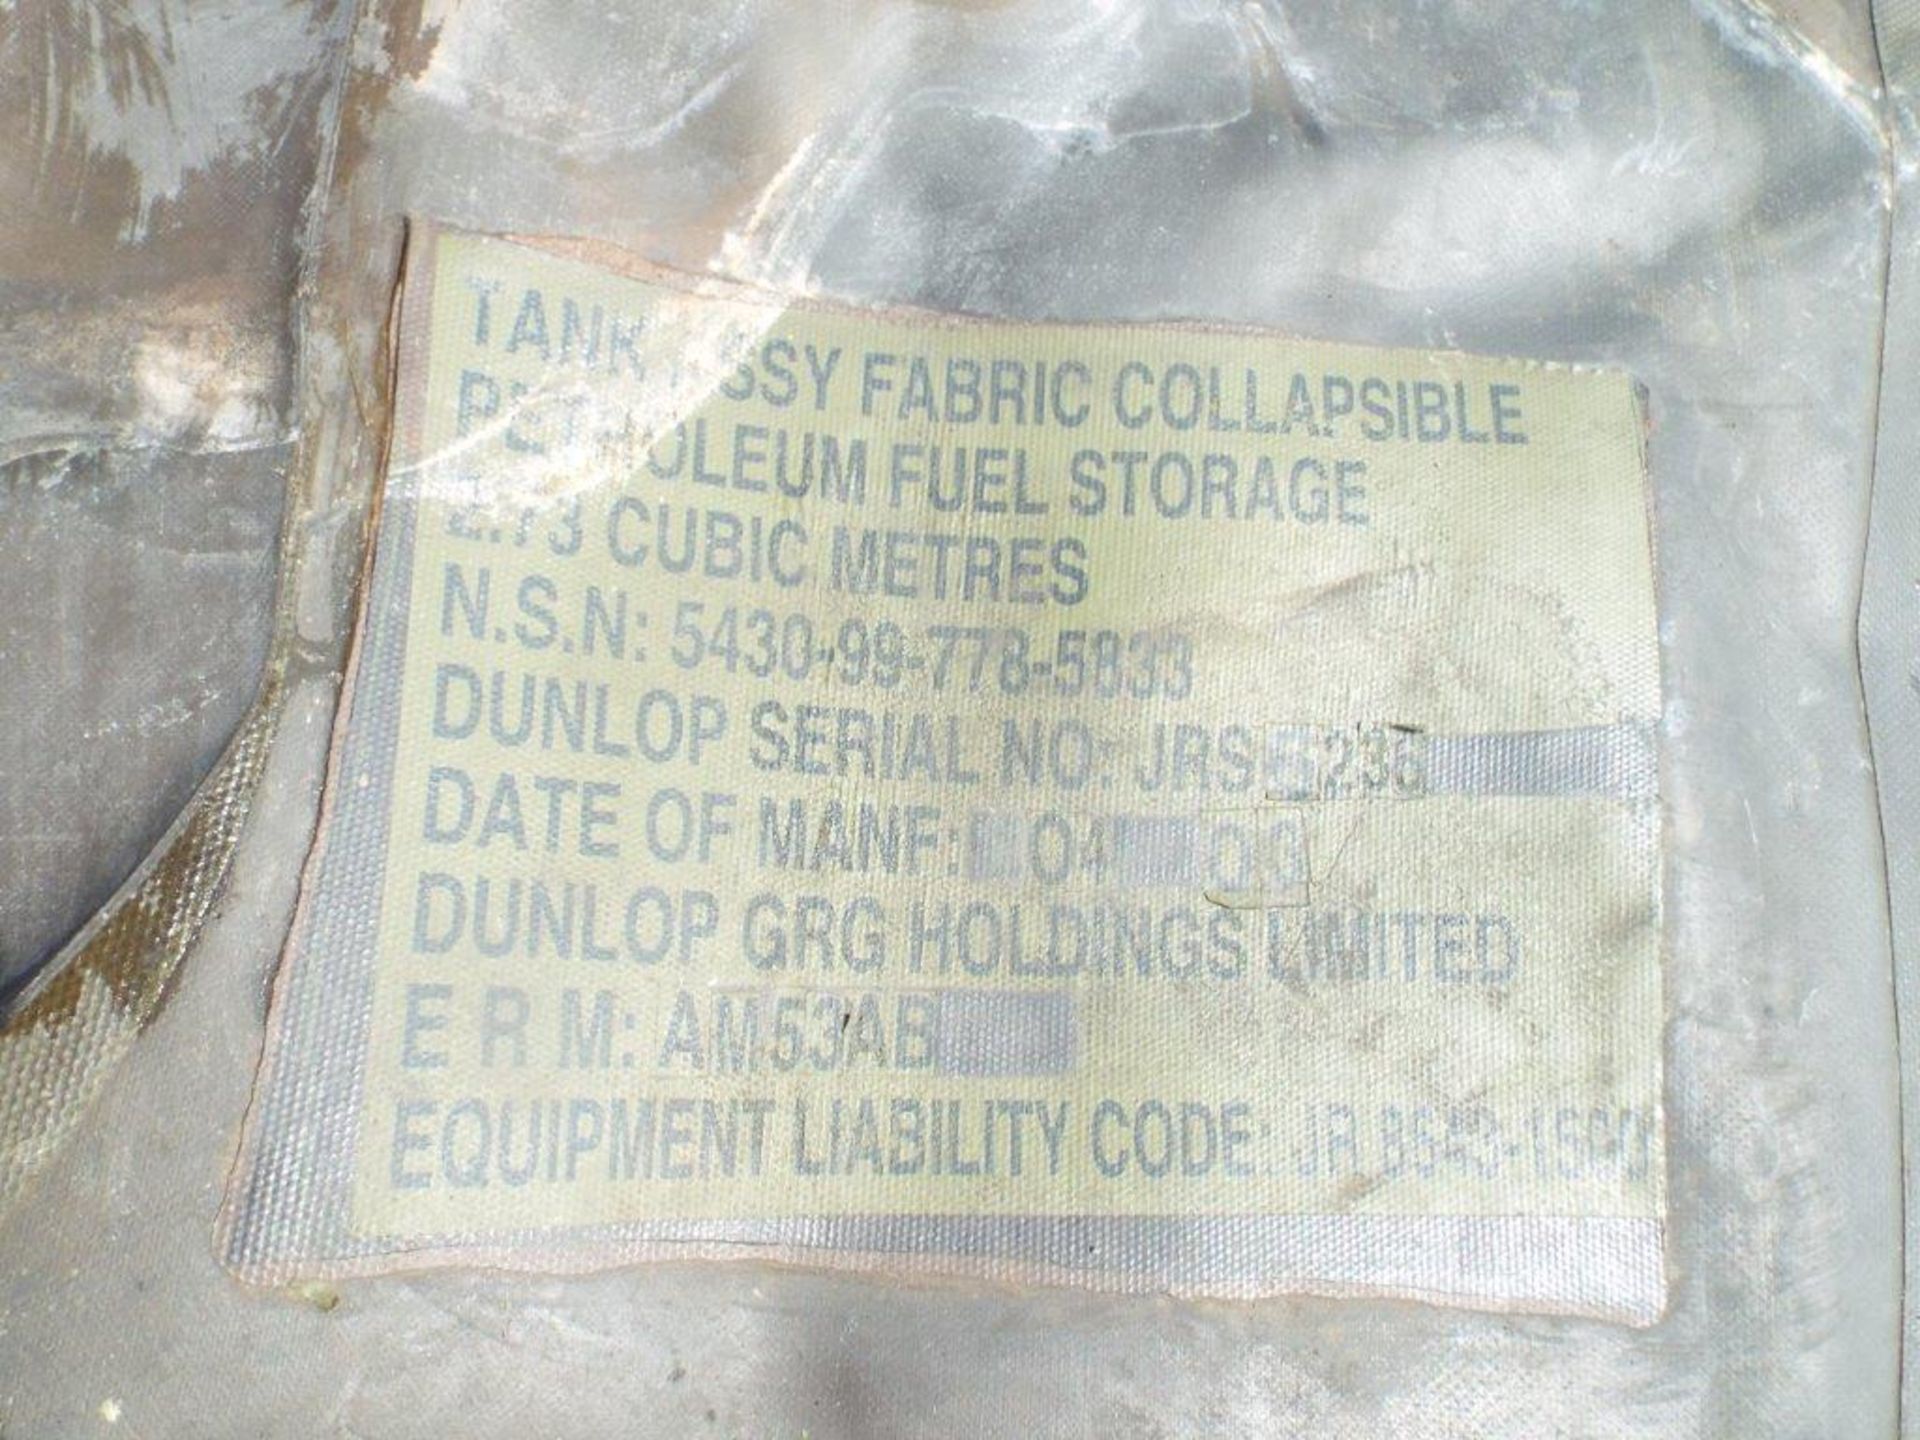 Dunlop 600 Gal Collapsible Fuel/Fluid Storage Bladder - Image 8 of 10